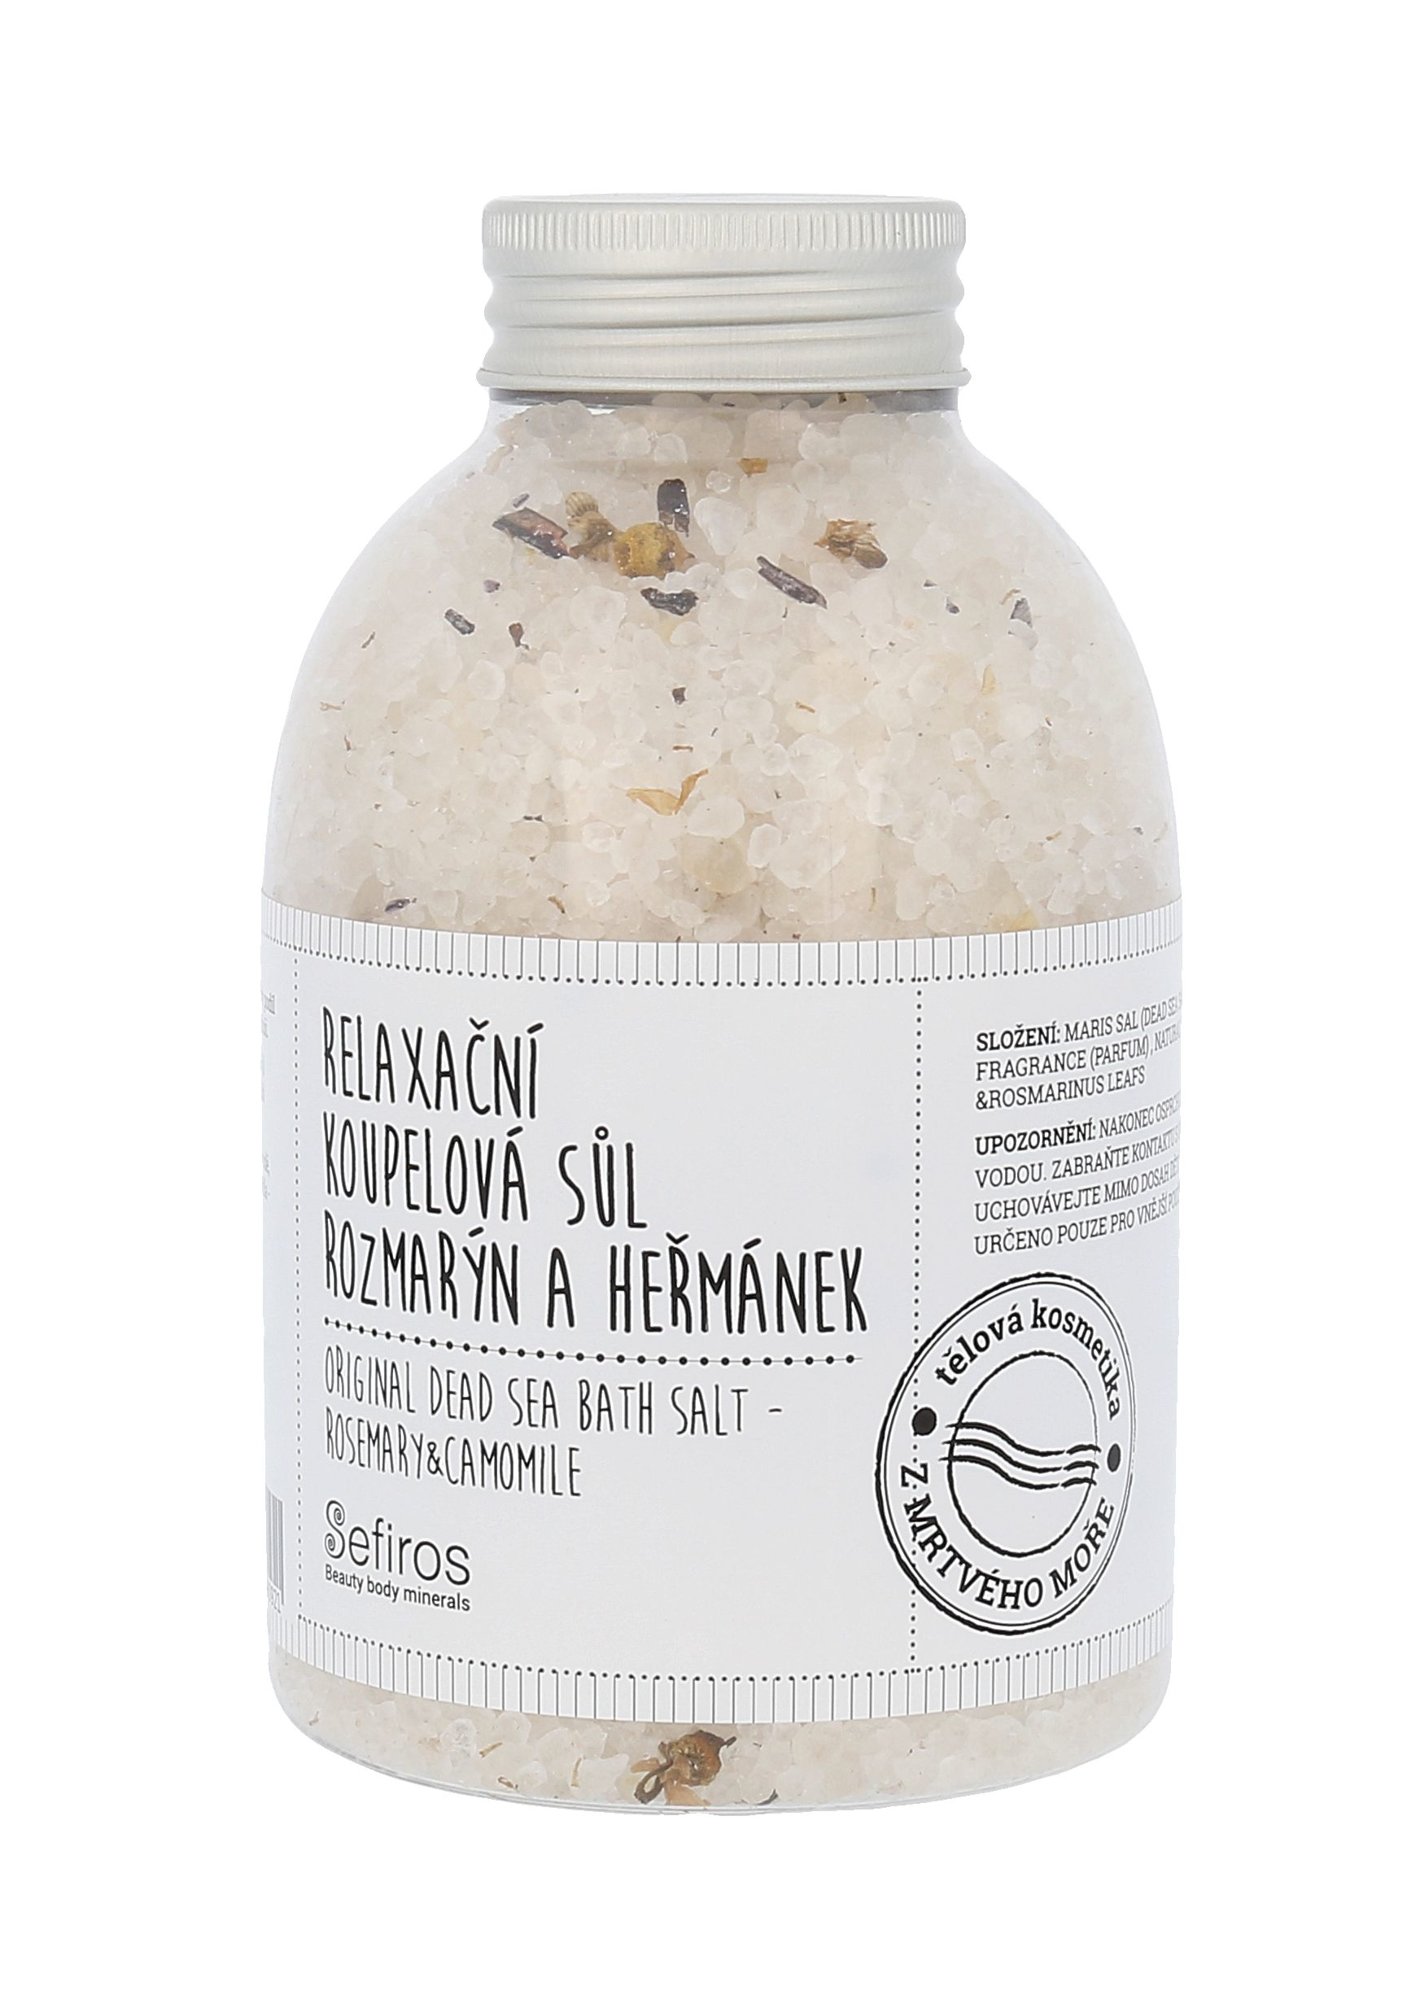 Sefiros Original Dead Sea Bath Salt Rosemary & Camomile 500g vonios druska